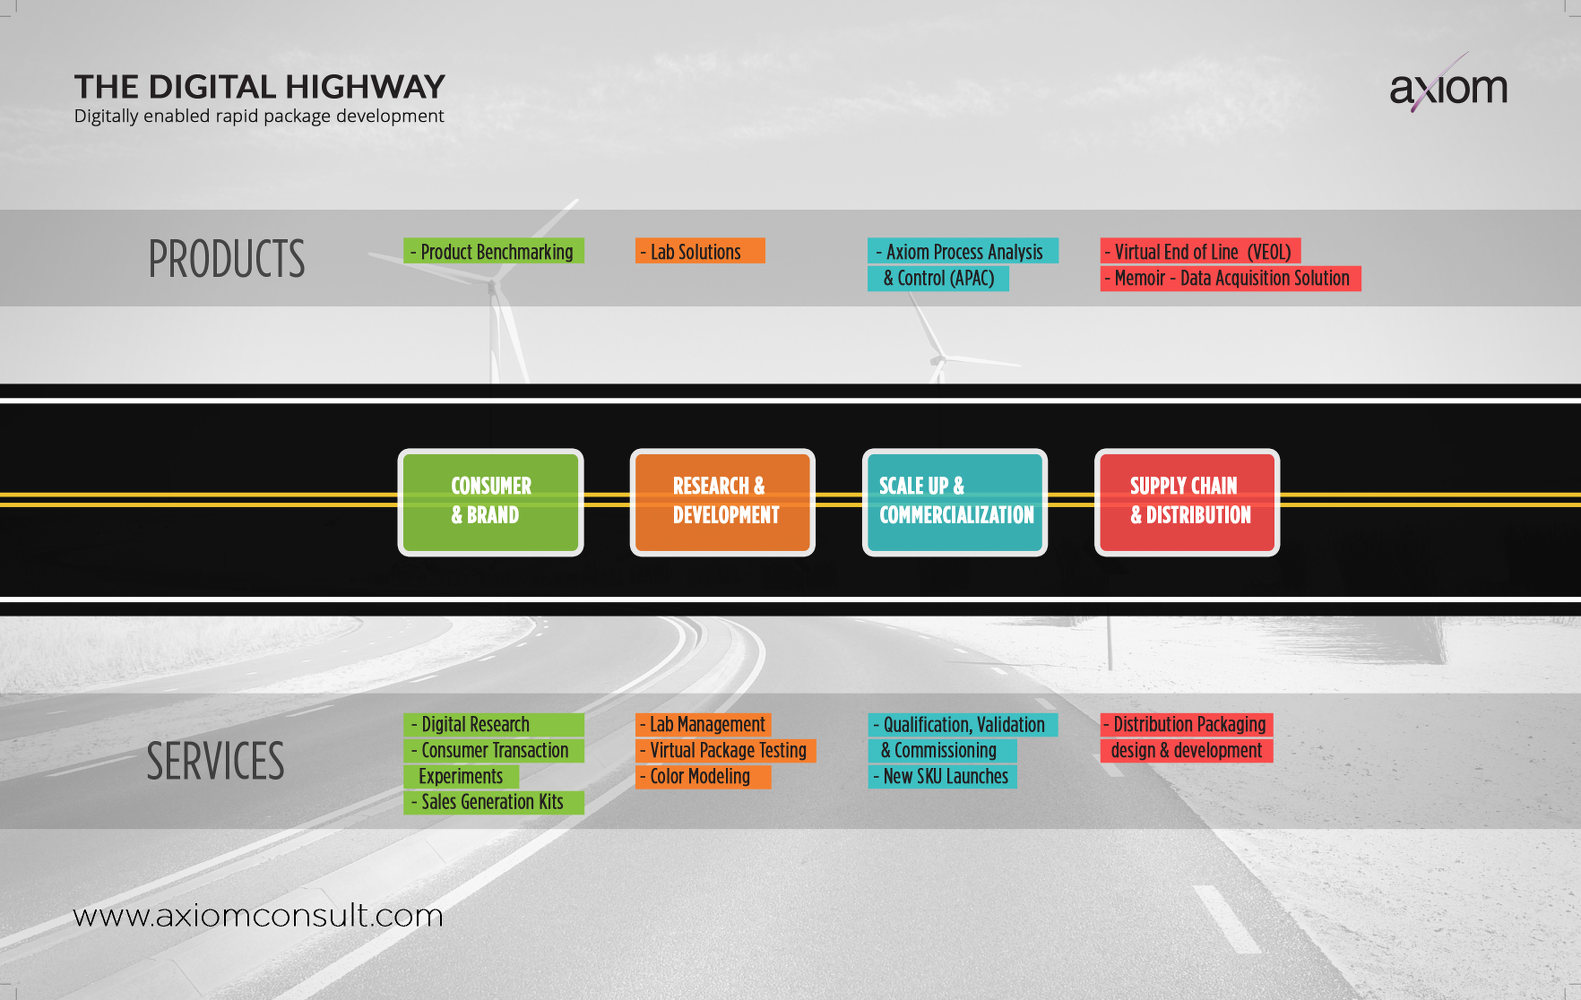 The digital highway - Digitally enabled rapid package development